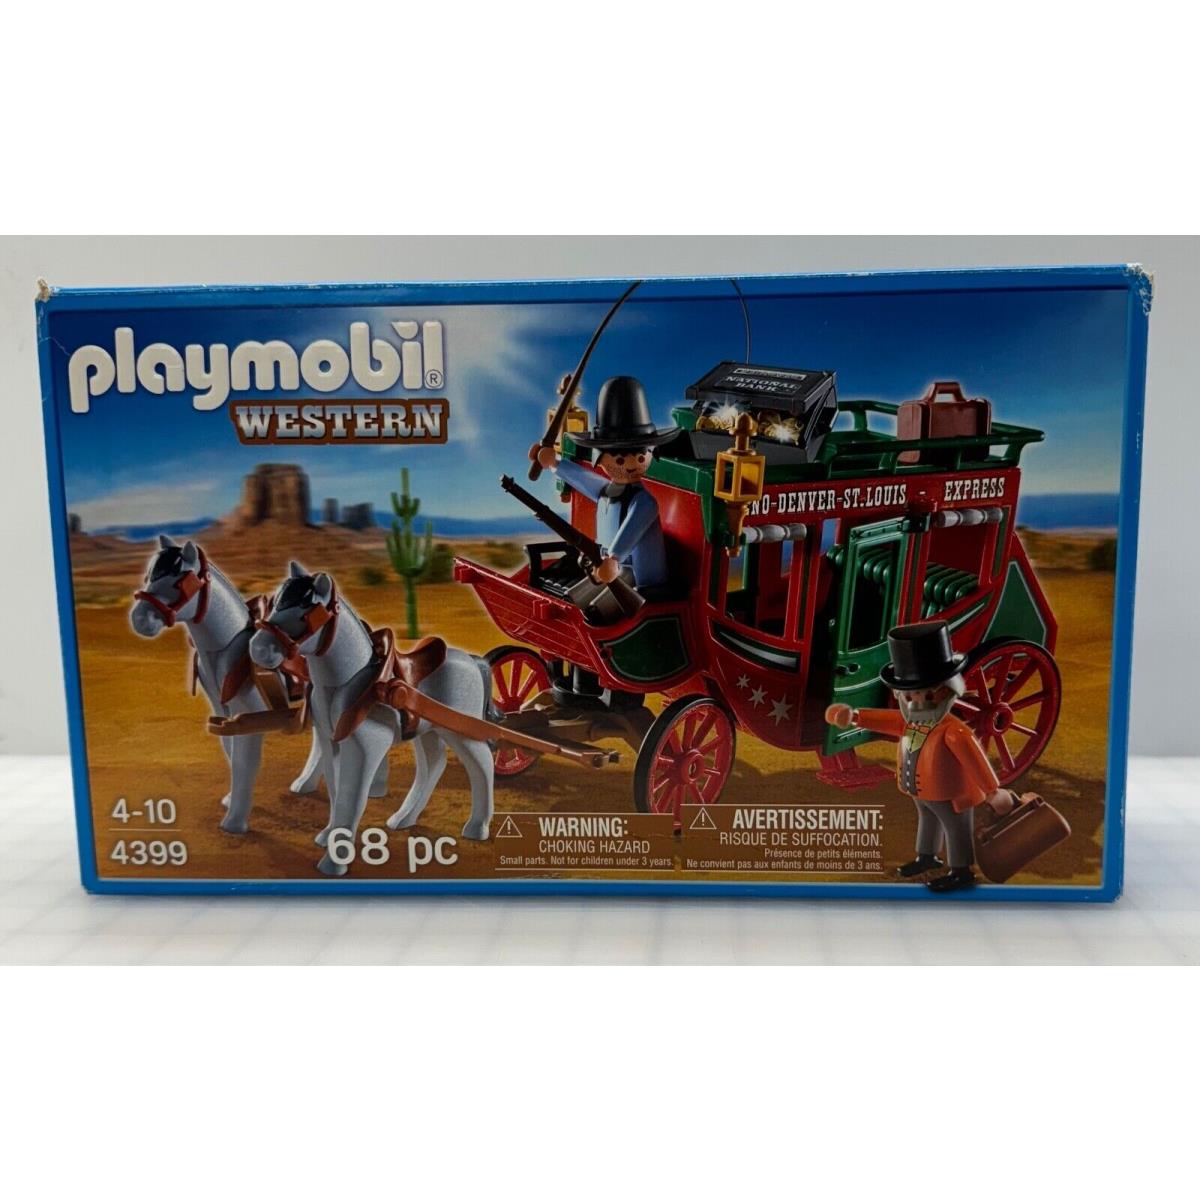 Playmobil 4399 Western Stagecoach Set